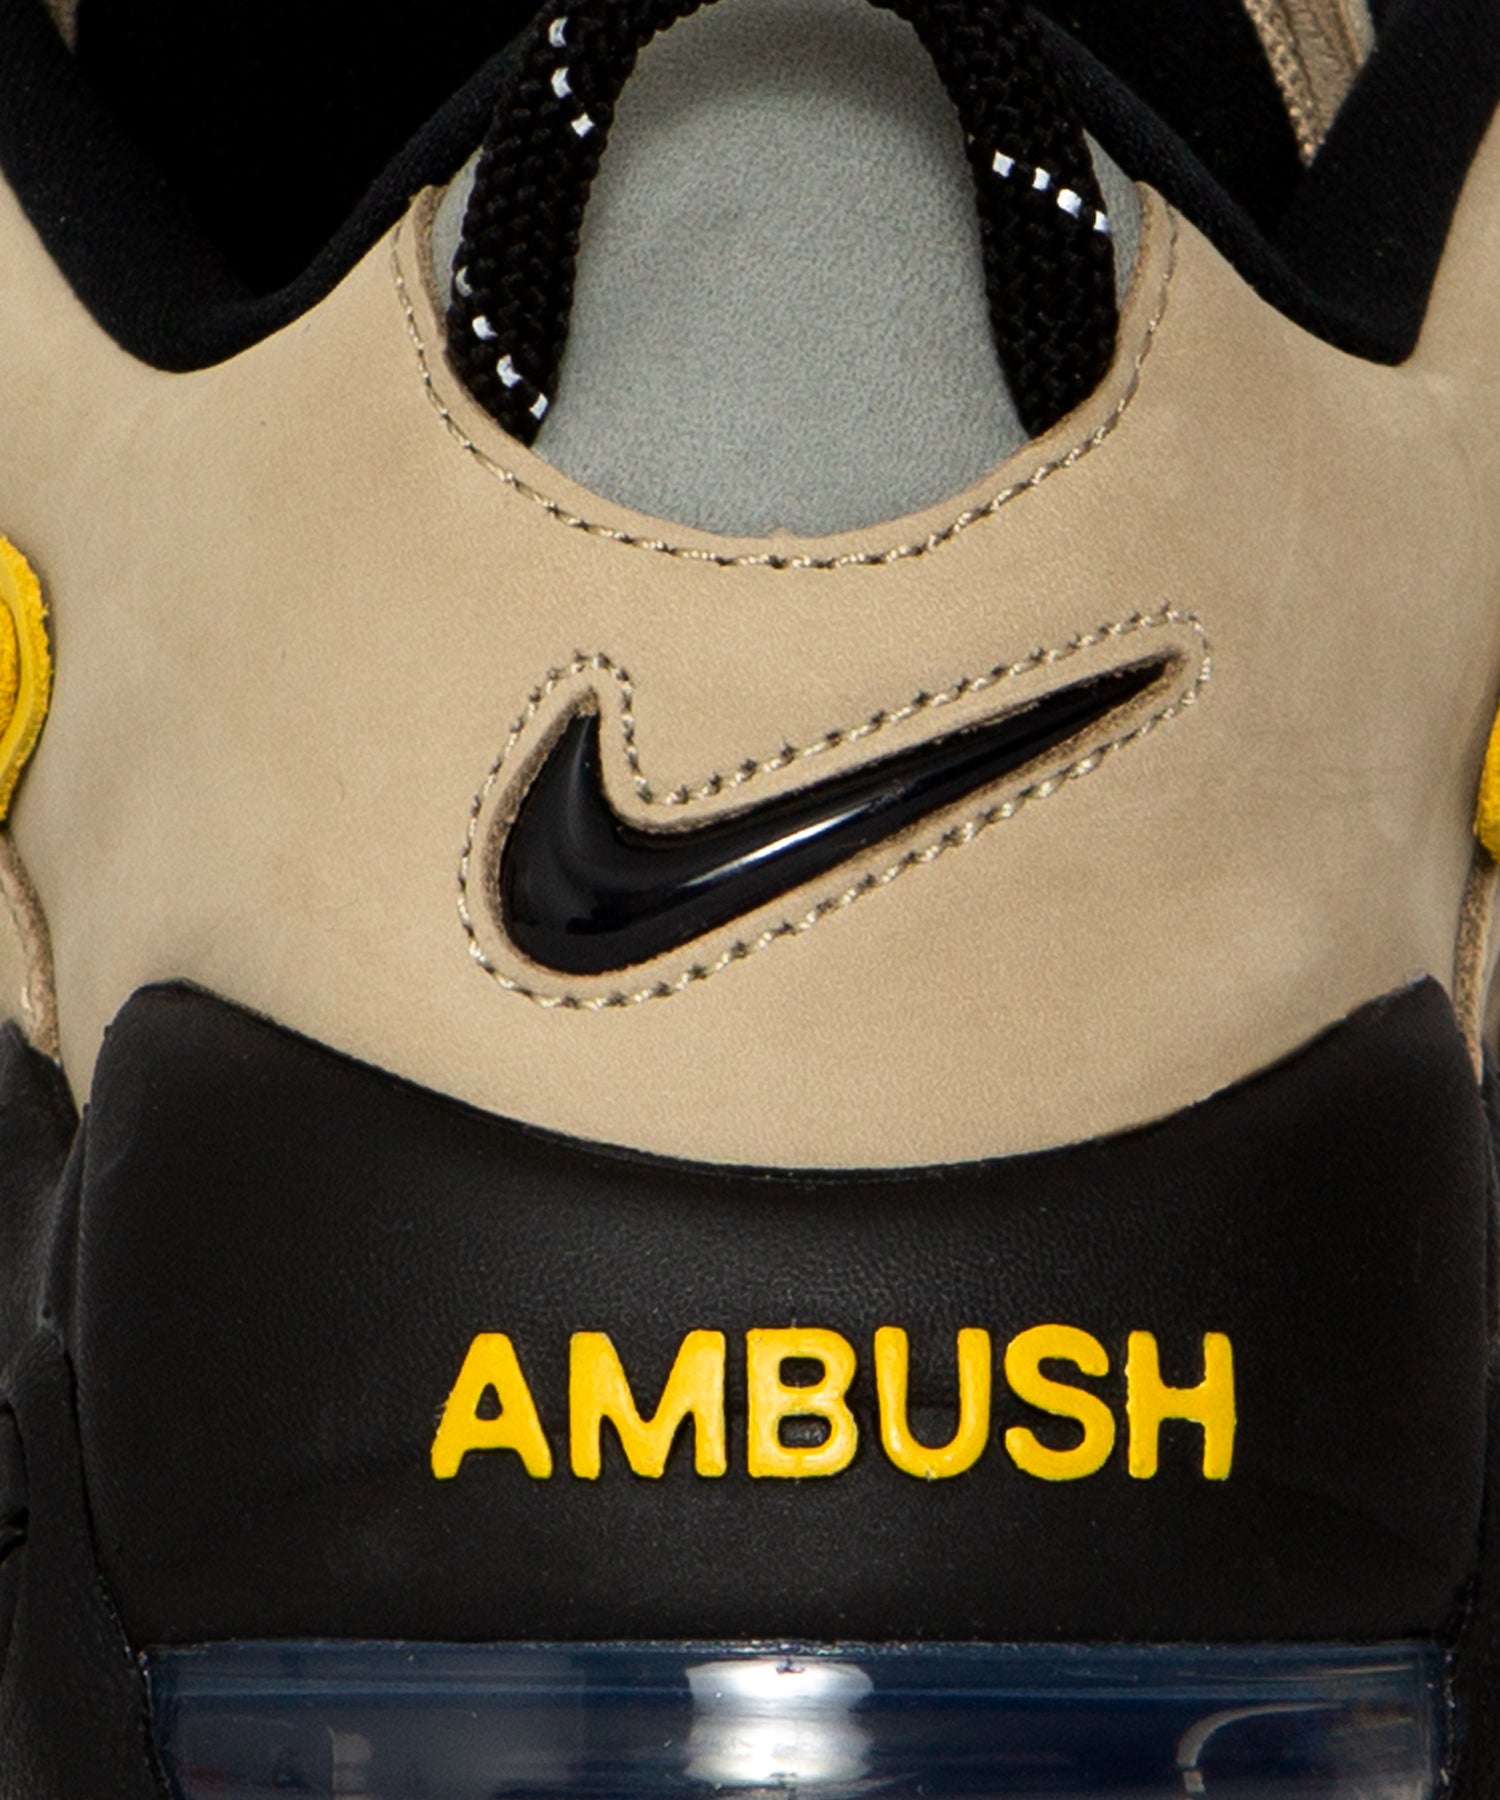 AMBUSH x Nike Air More Uptempo Low SP (Limestone/Vivid Sulfur-Black-Flat Pewter)